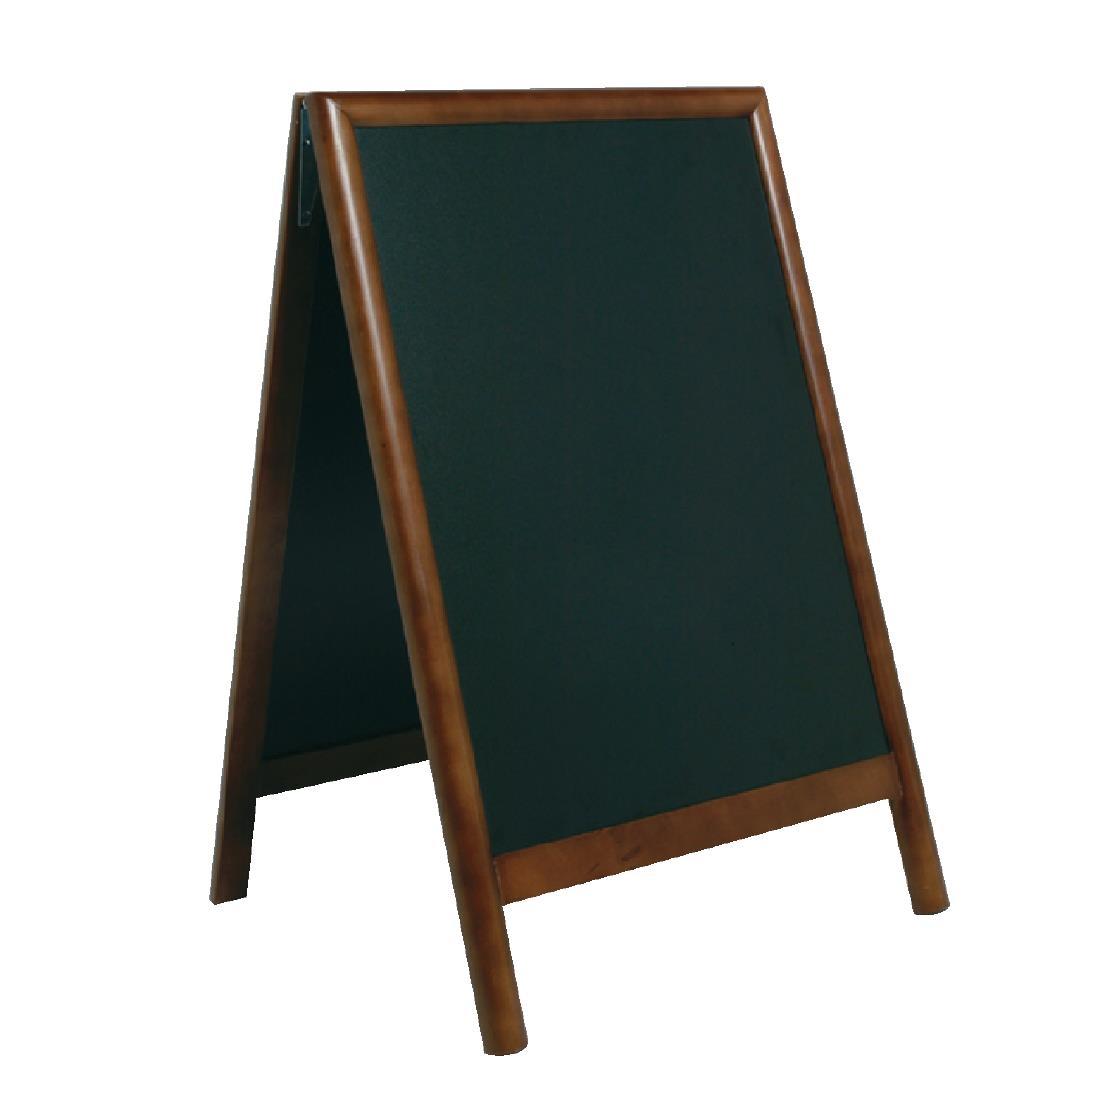 Securit Duplo Pavement Board 850 x 550mm Dark Wood - CE430  - 1